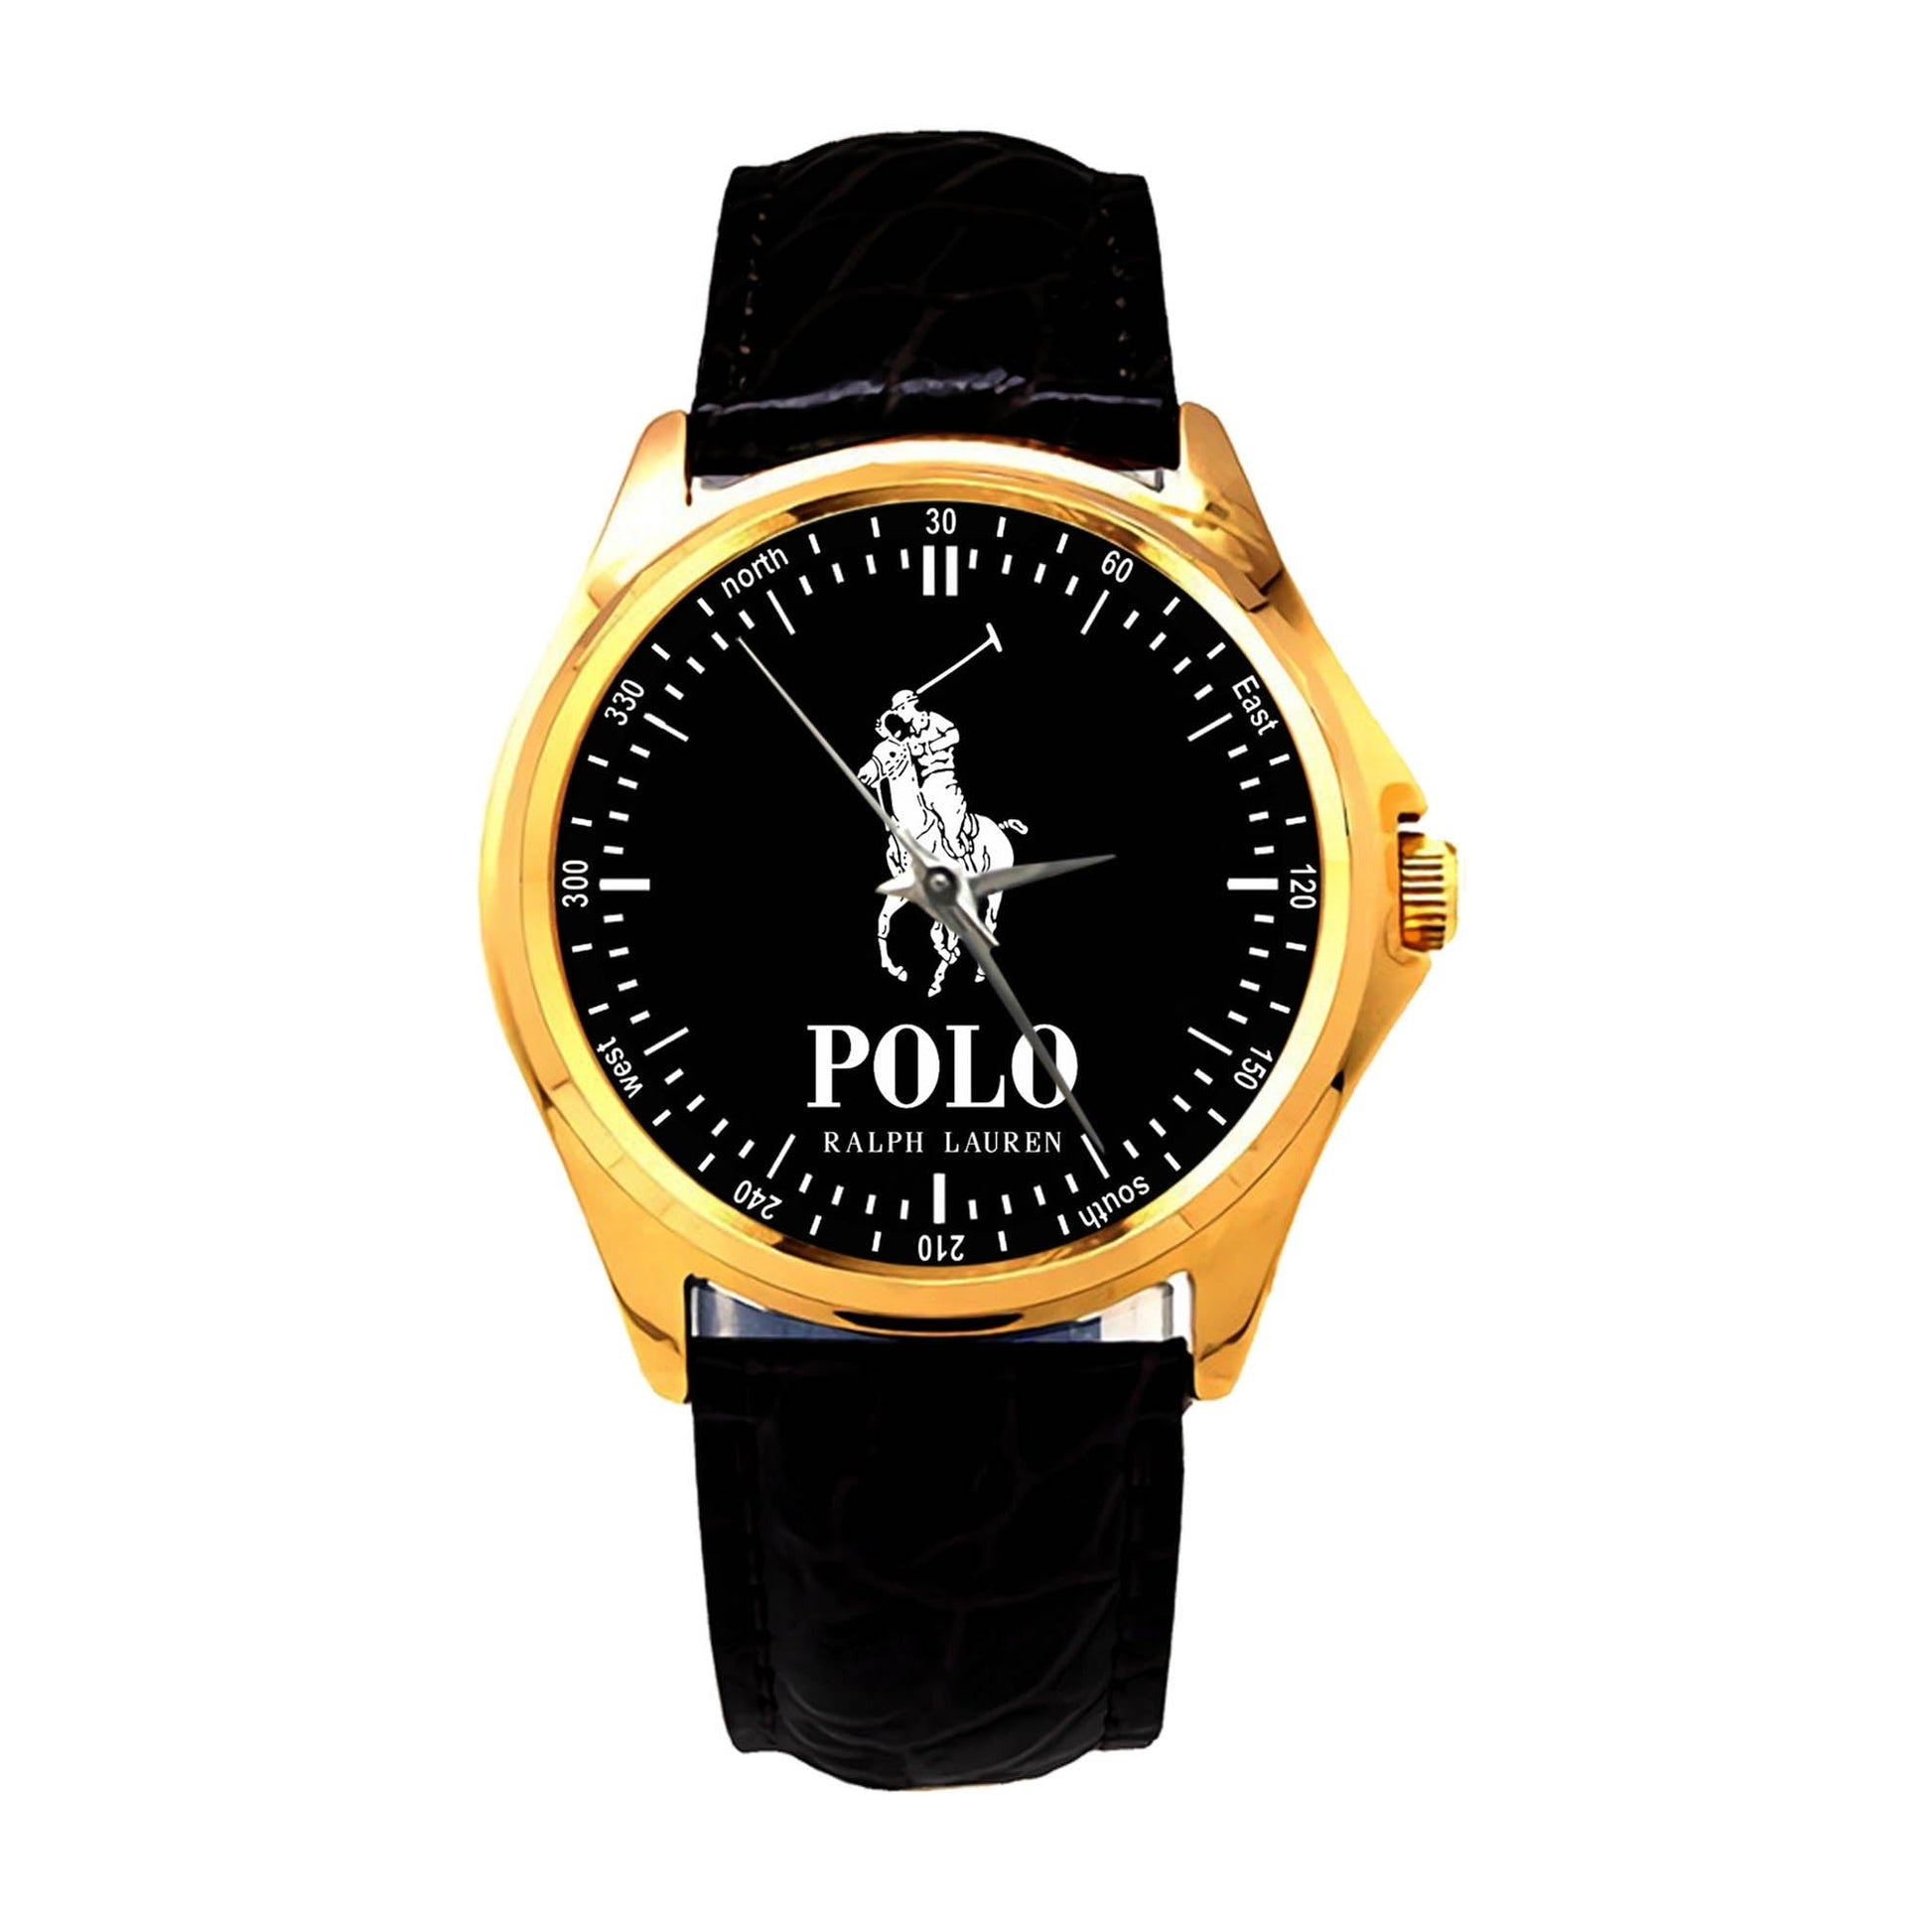 Polo Ralph Lauren Watches KP657